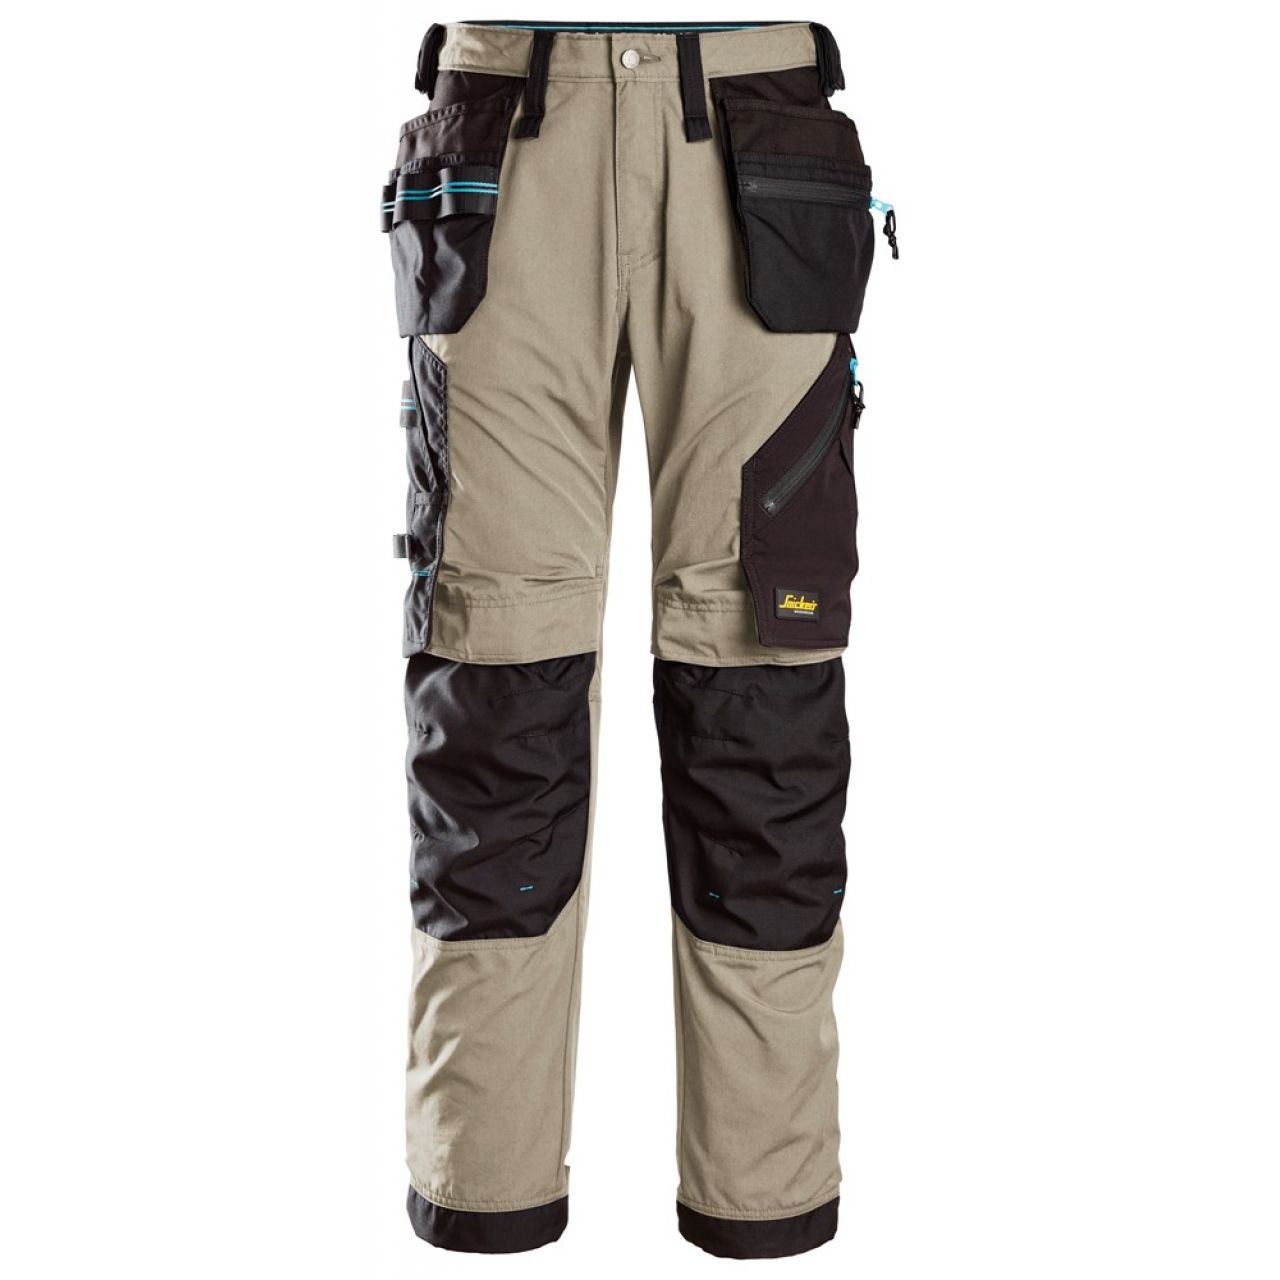 6210 Pantalones largos de trabajo con bolsillos flotantes LiteWork 37.5® beige-negro talla 50